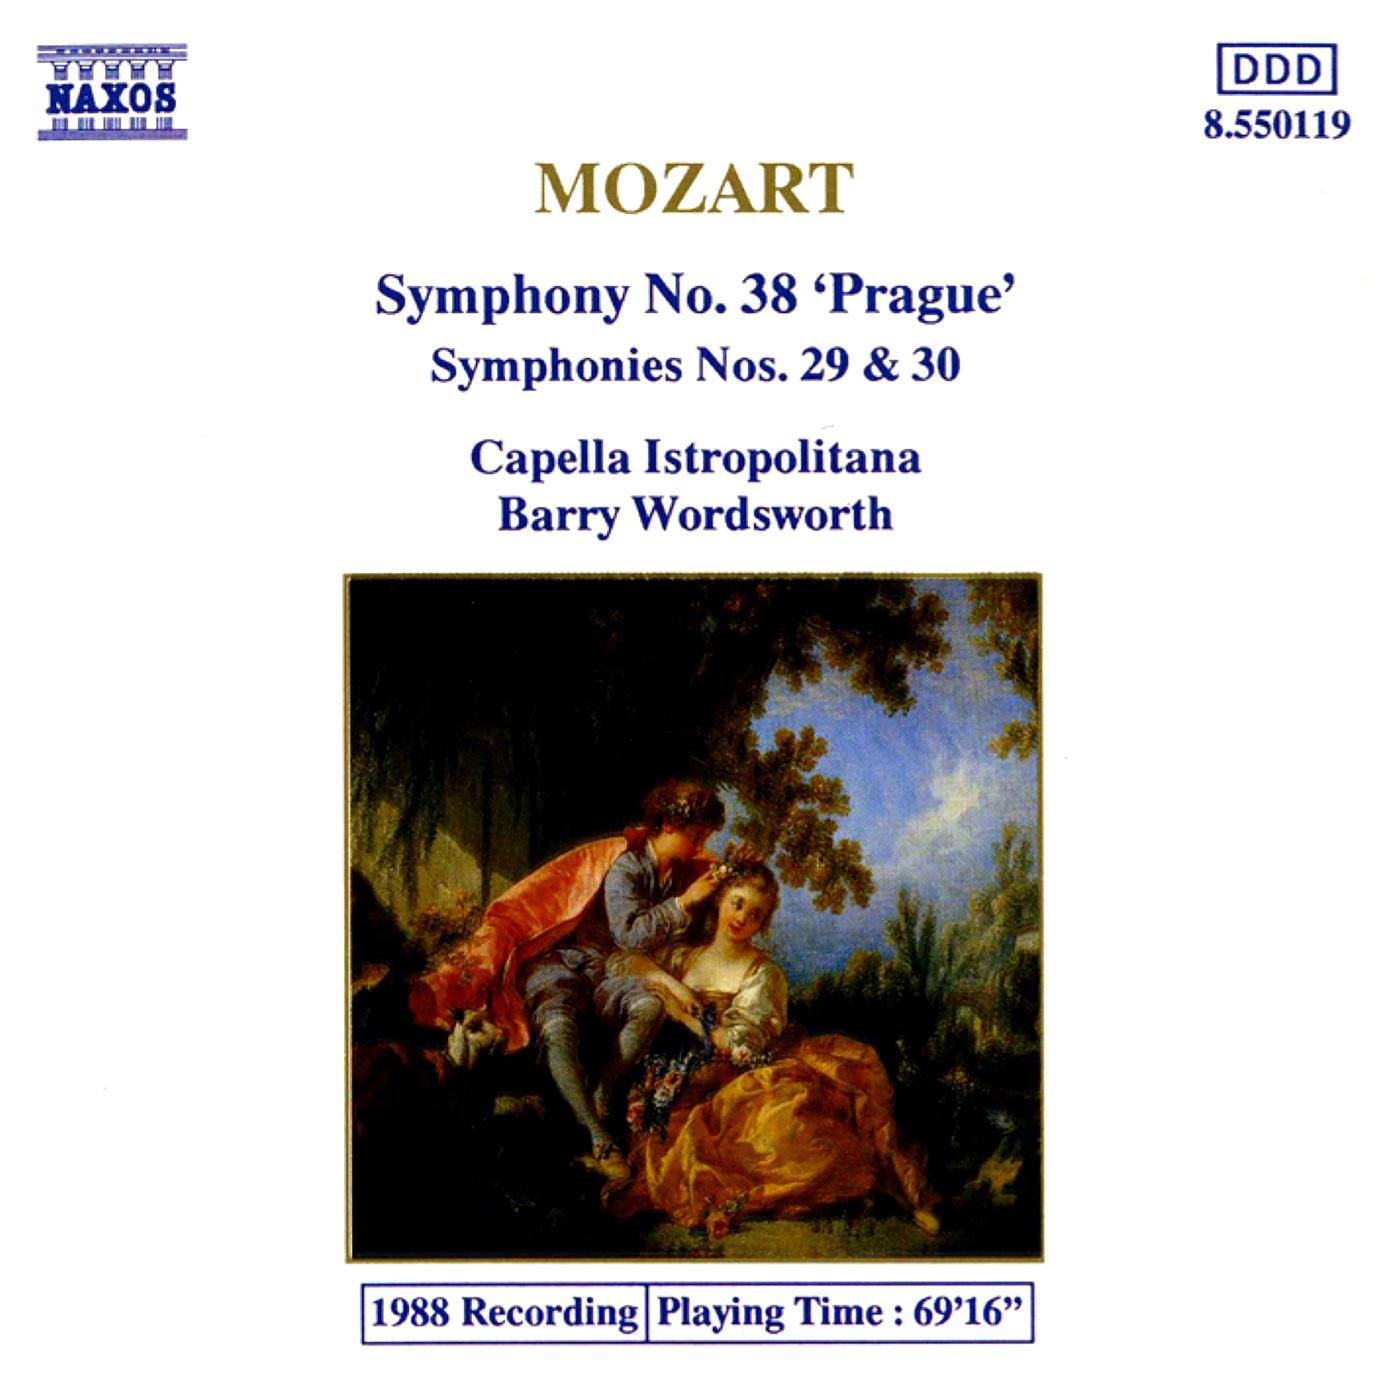 MOZART: Symphonies Nos. 29, 30 and 38